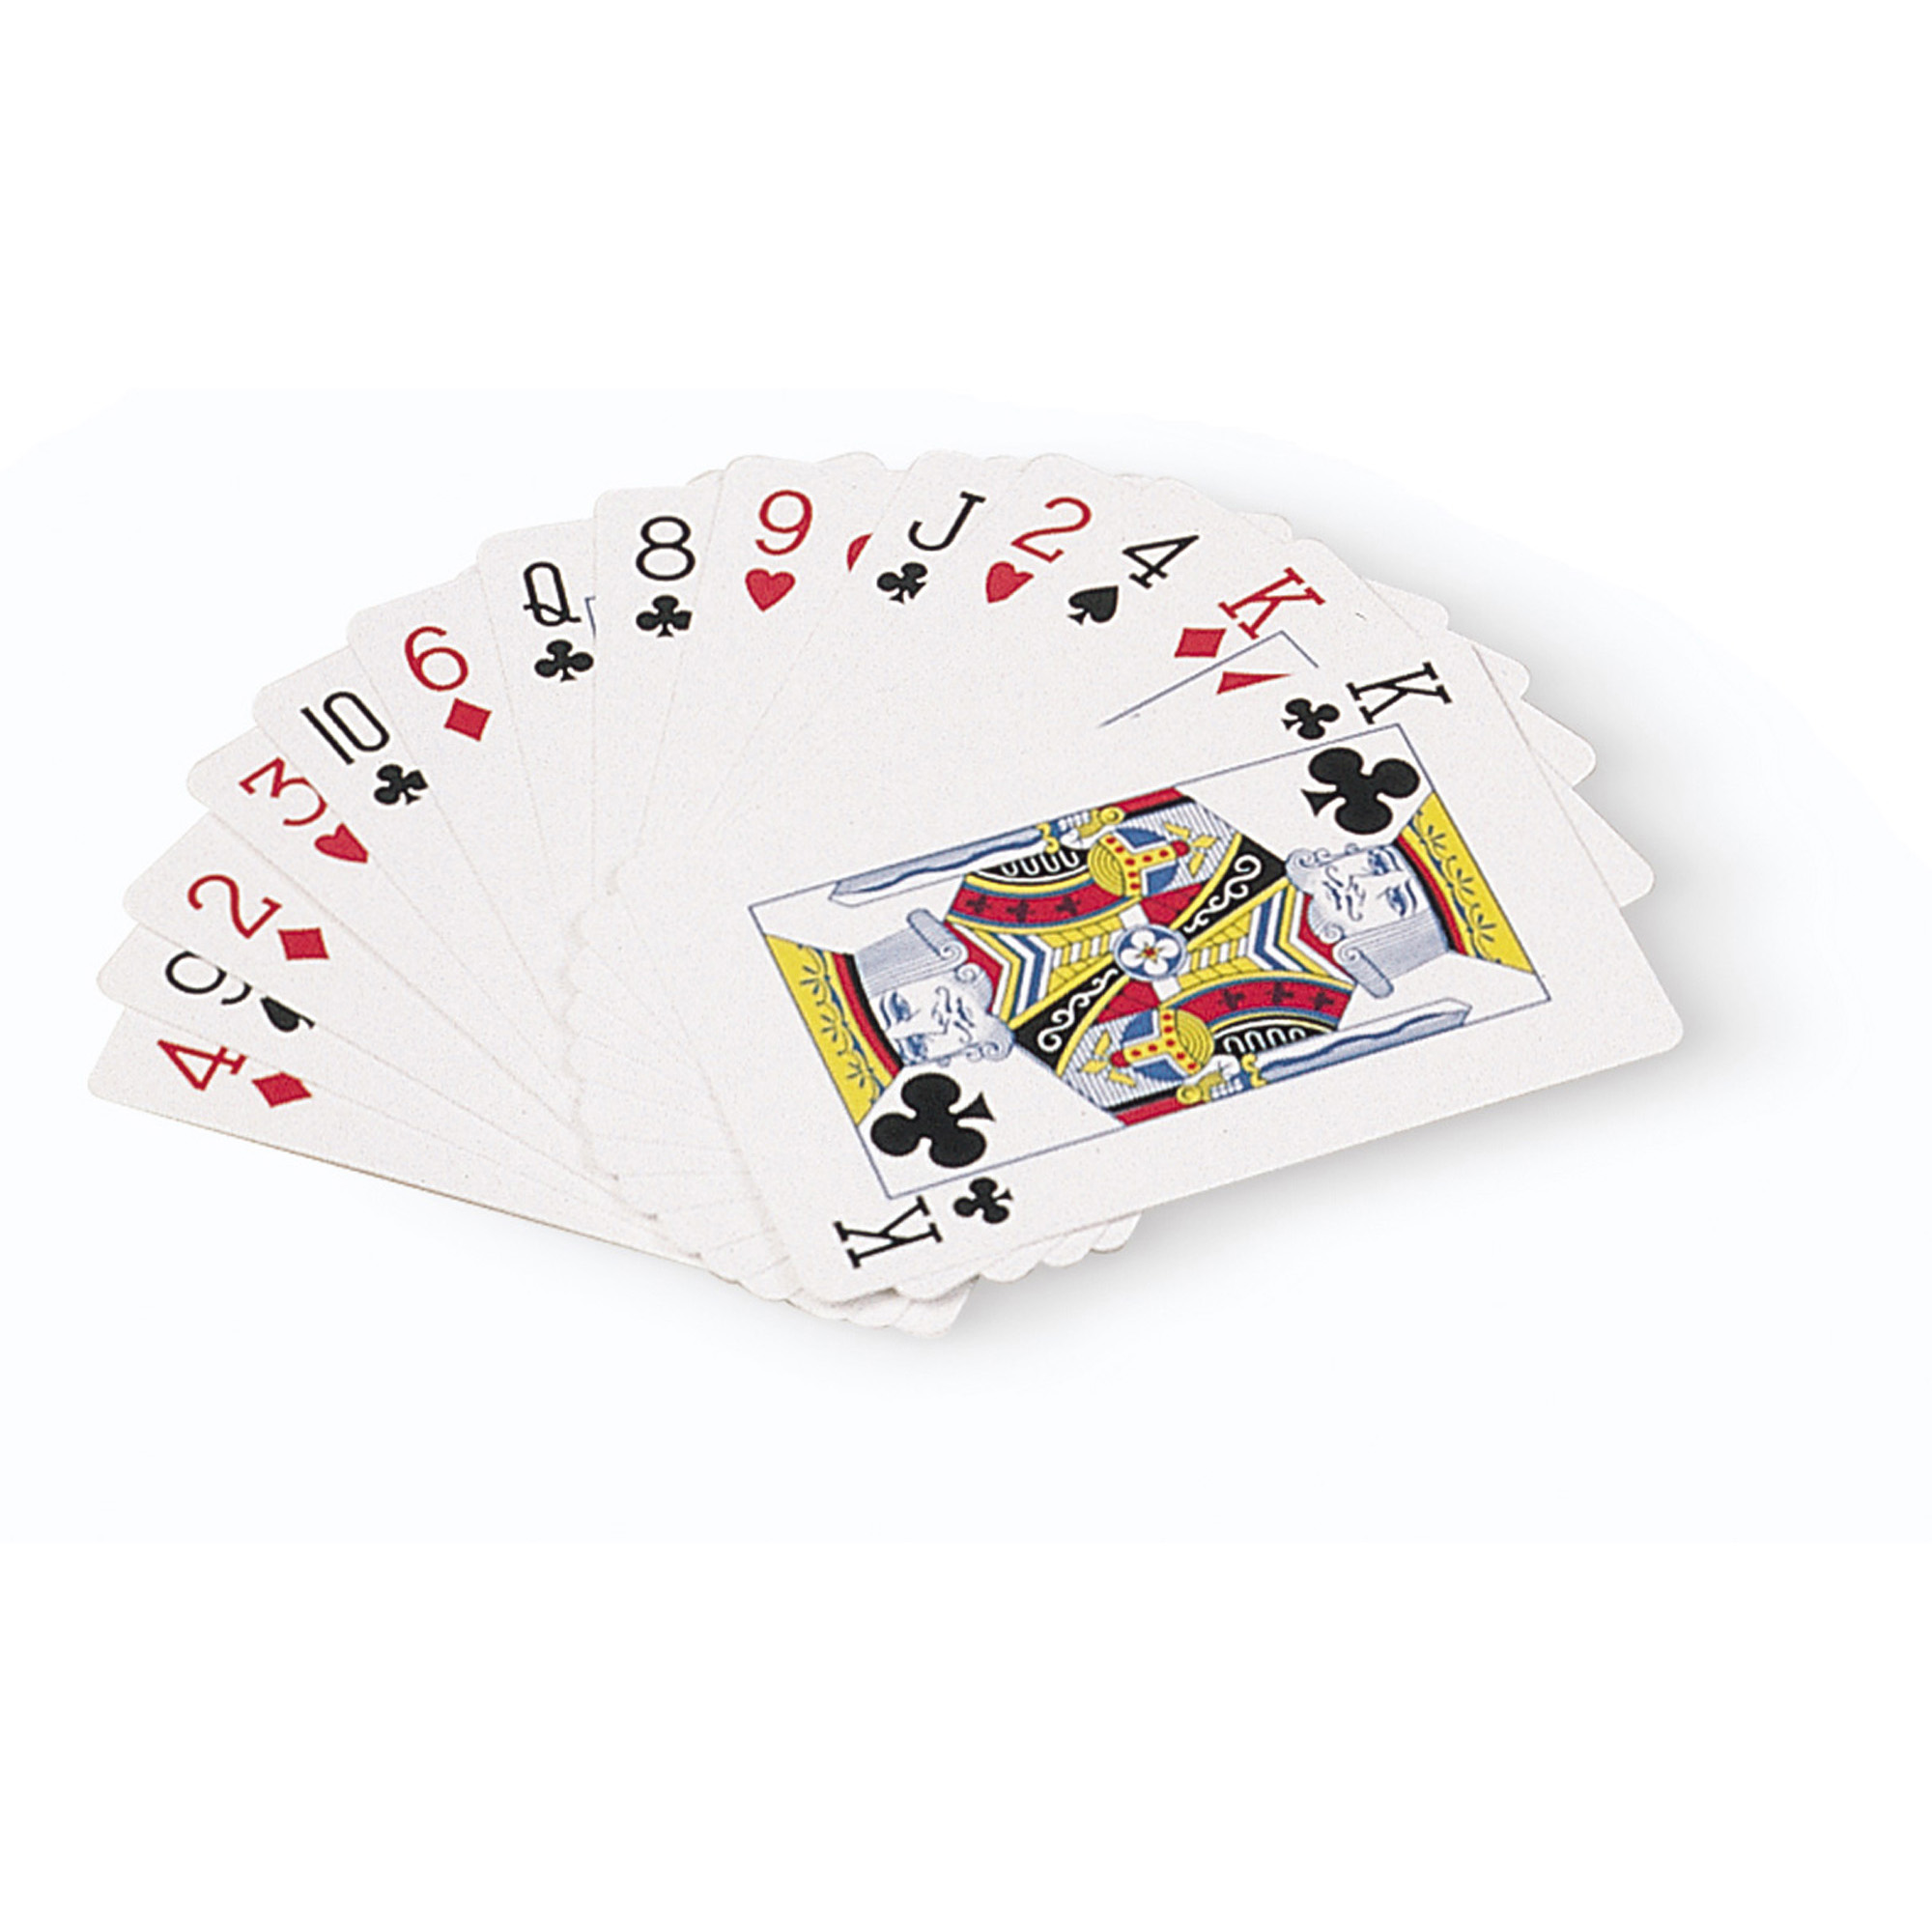 250 set ultimate magic tricks & illusions - Marvin's Magic